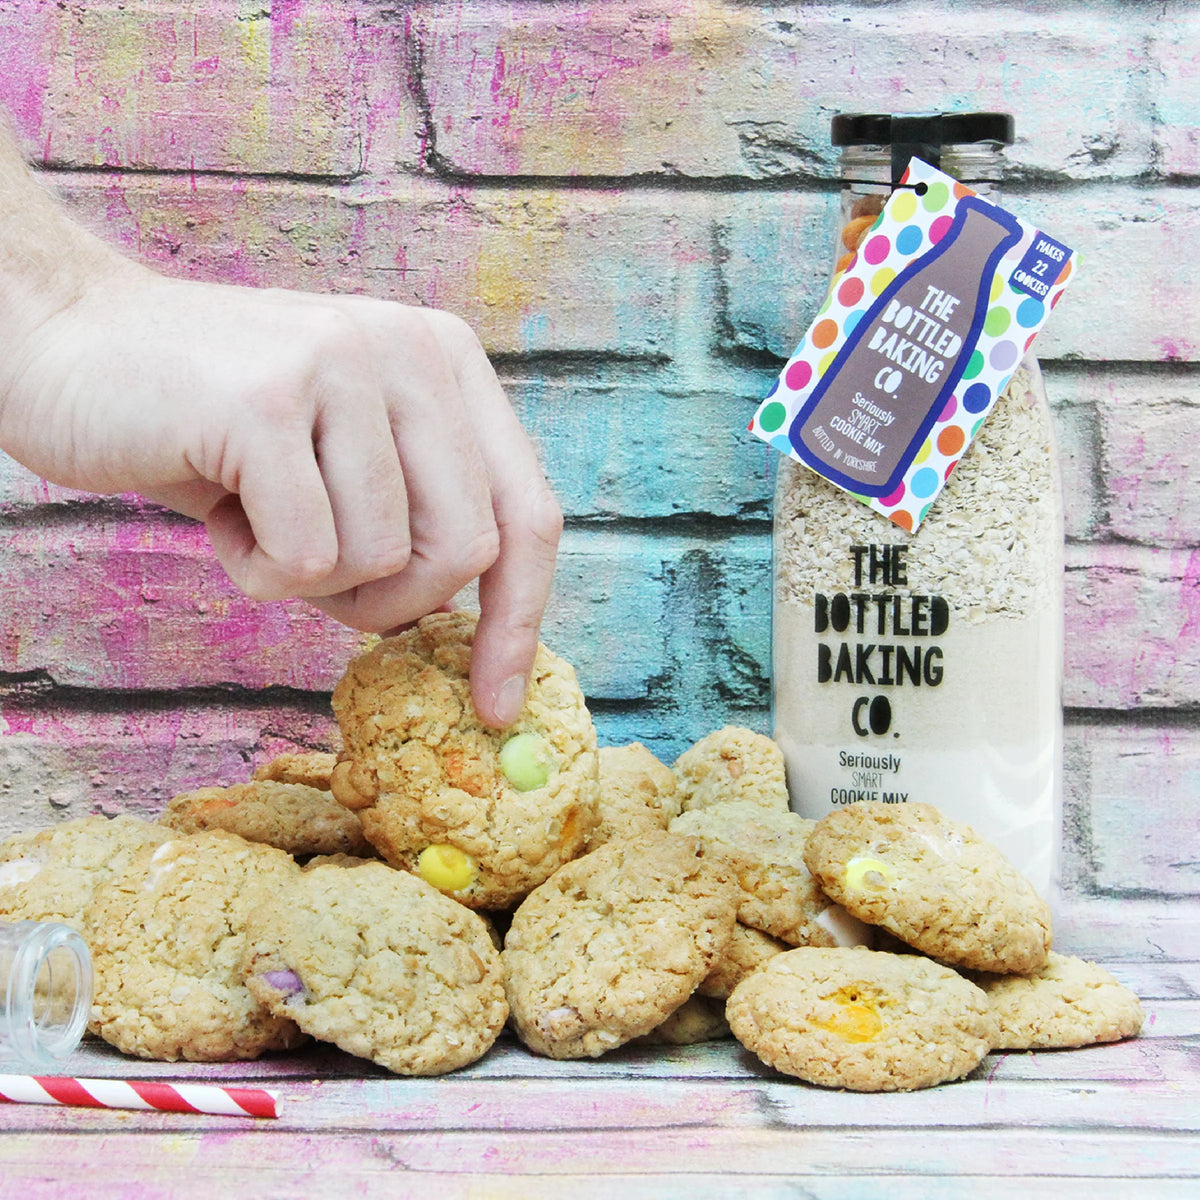 Smart Cookies Bottle Baking kit